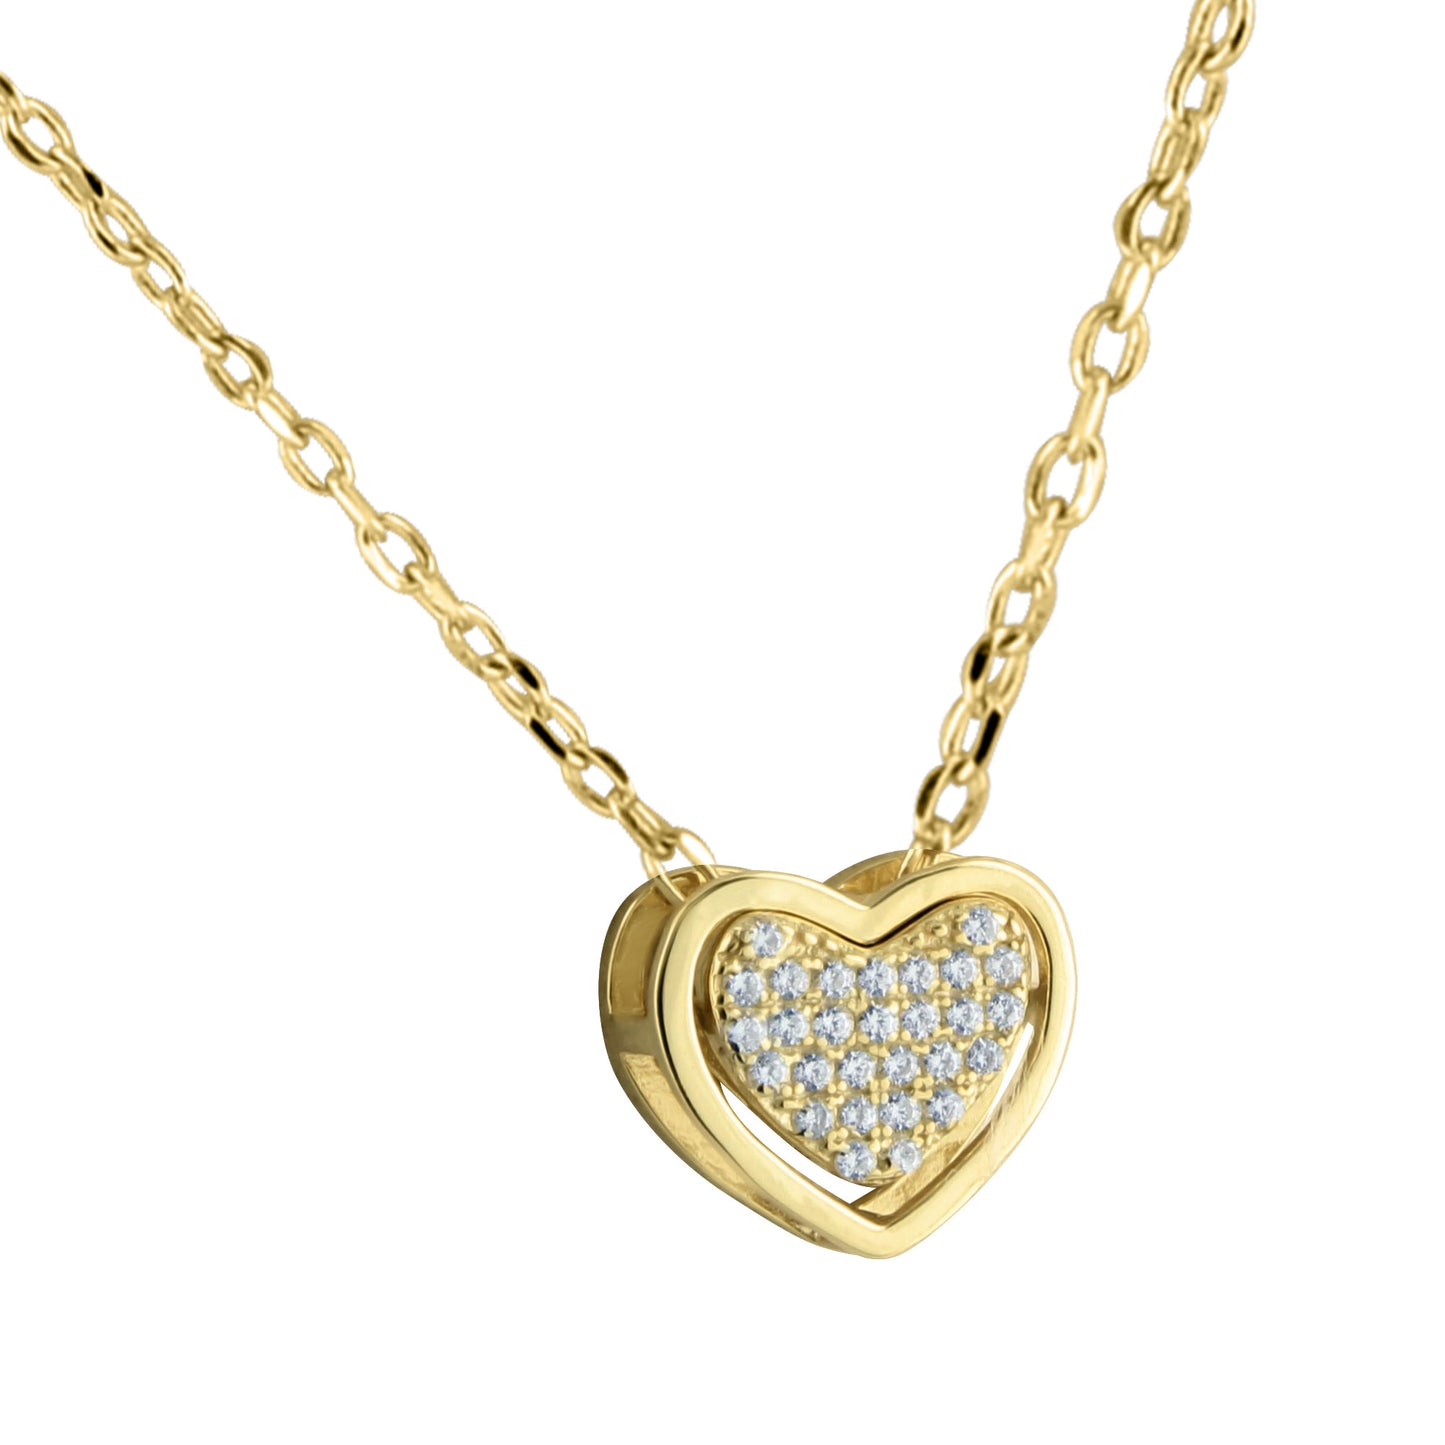 Heart Pendant 14K Gold Finish Chain Ladies